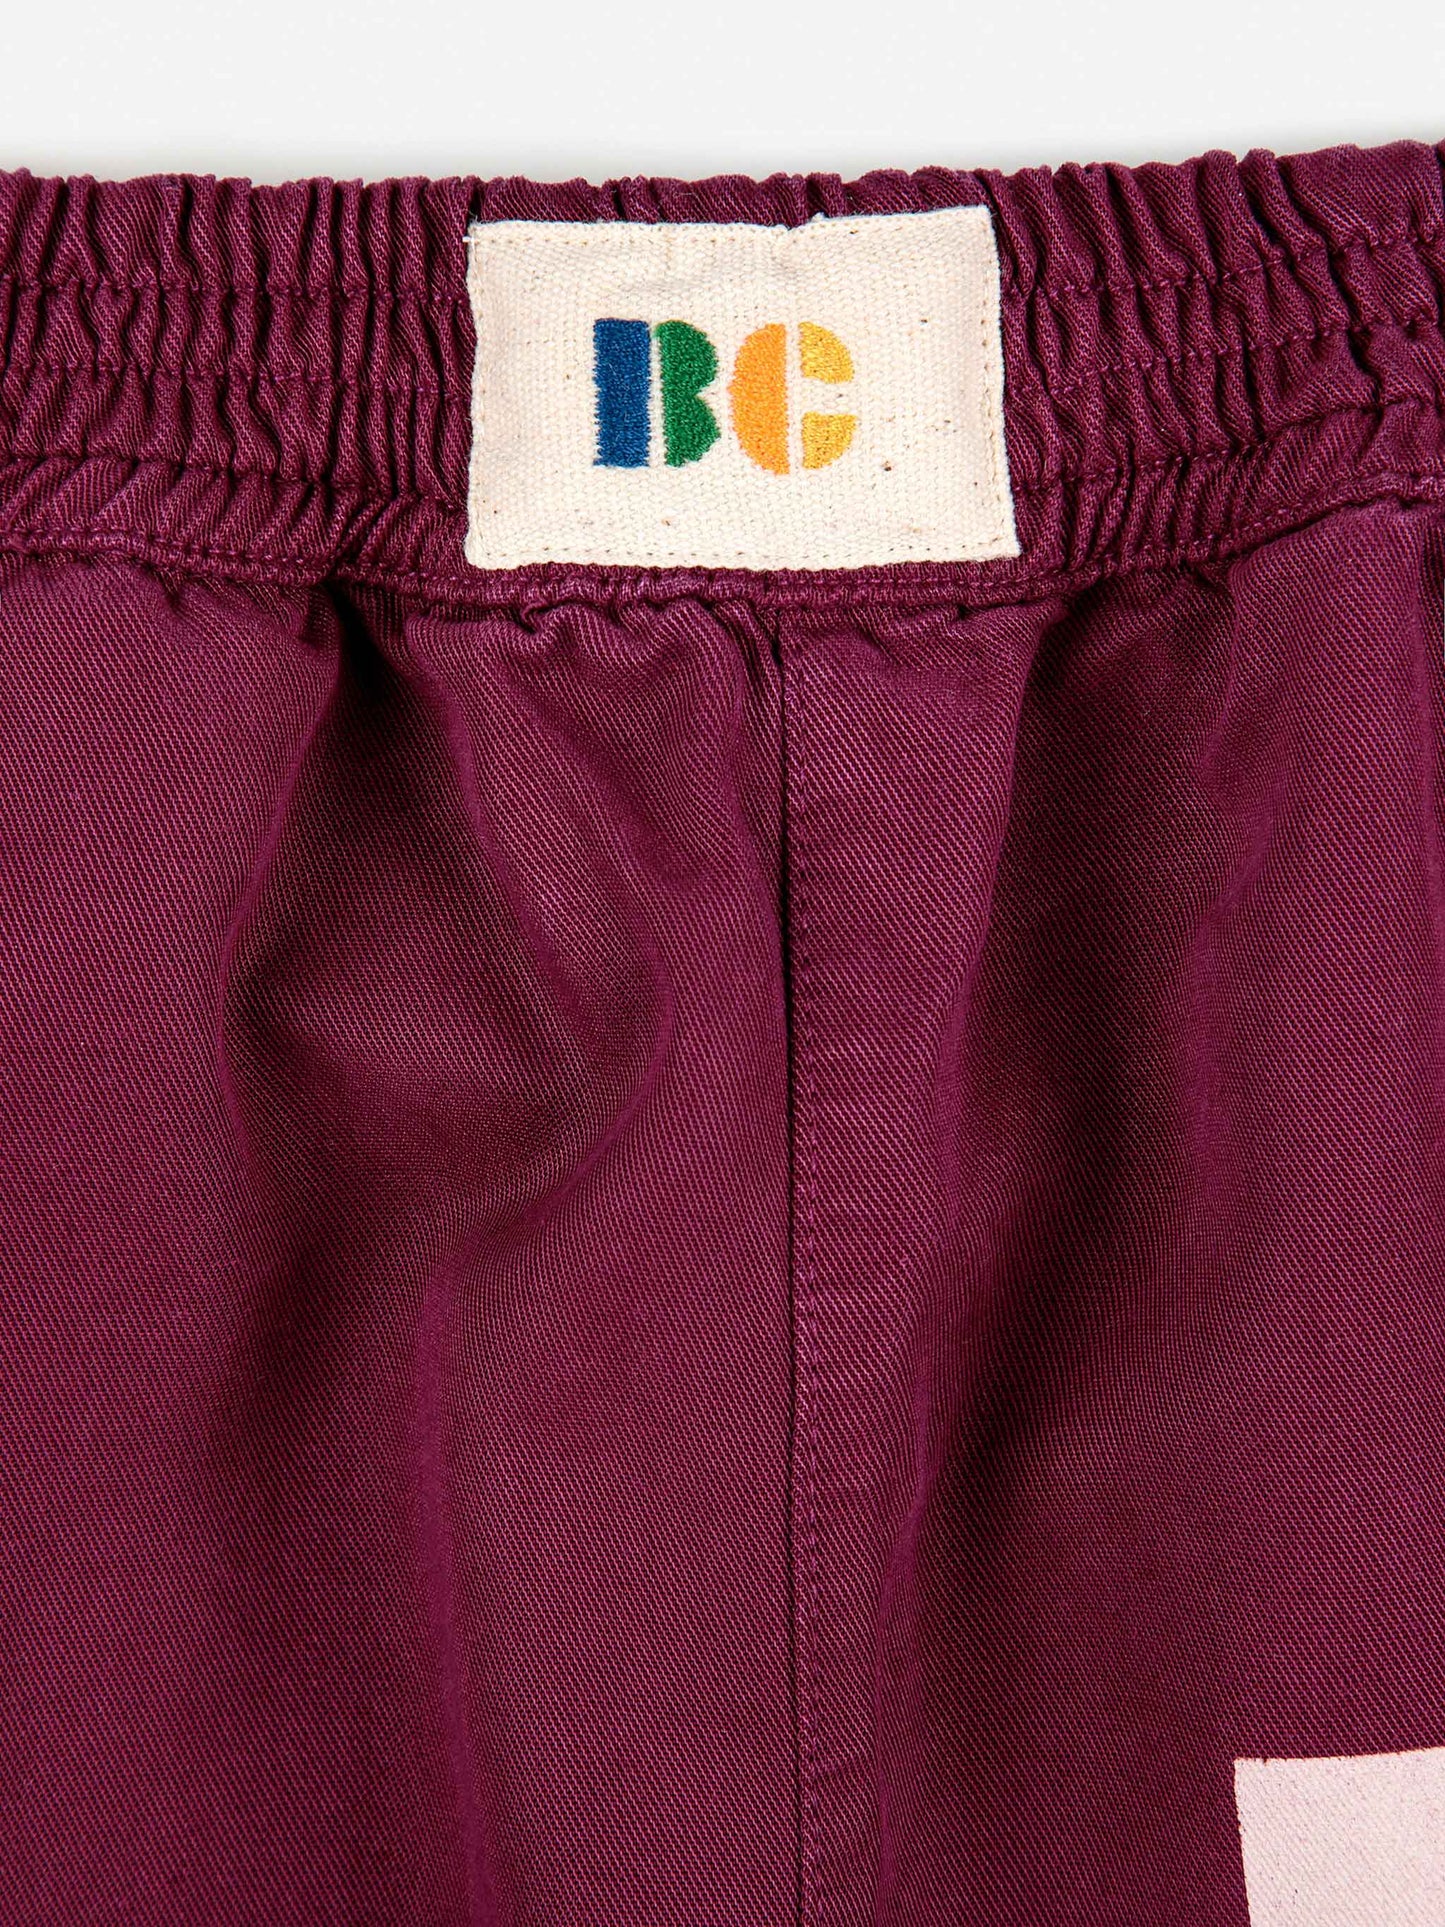 B.C straight pants